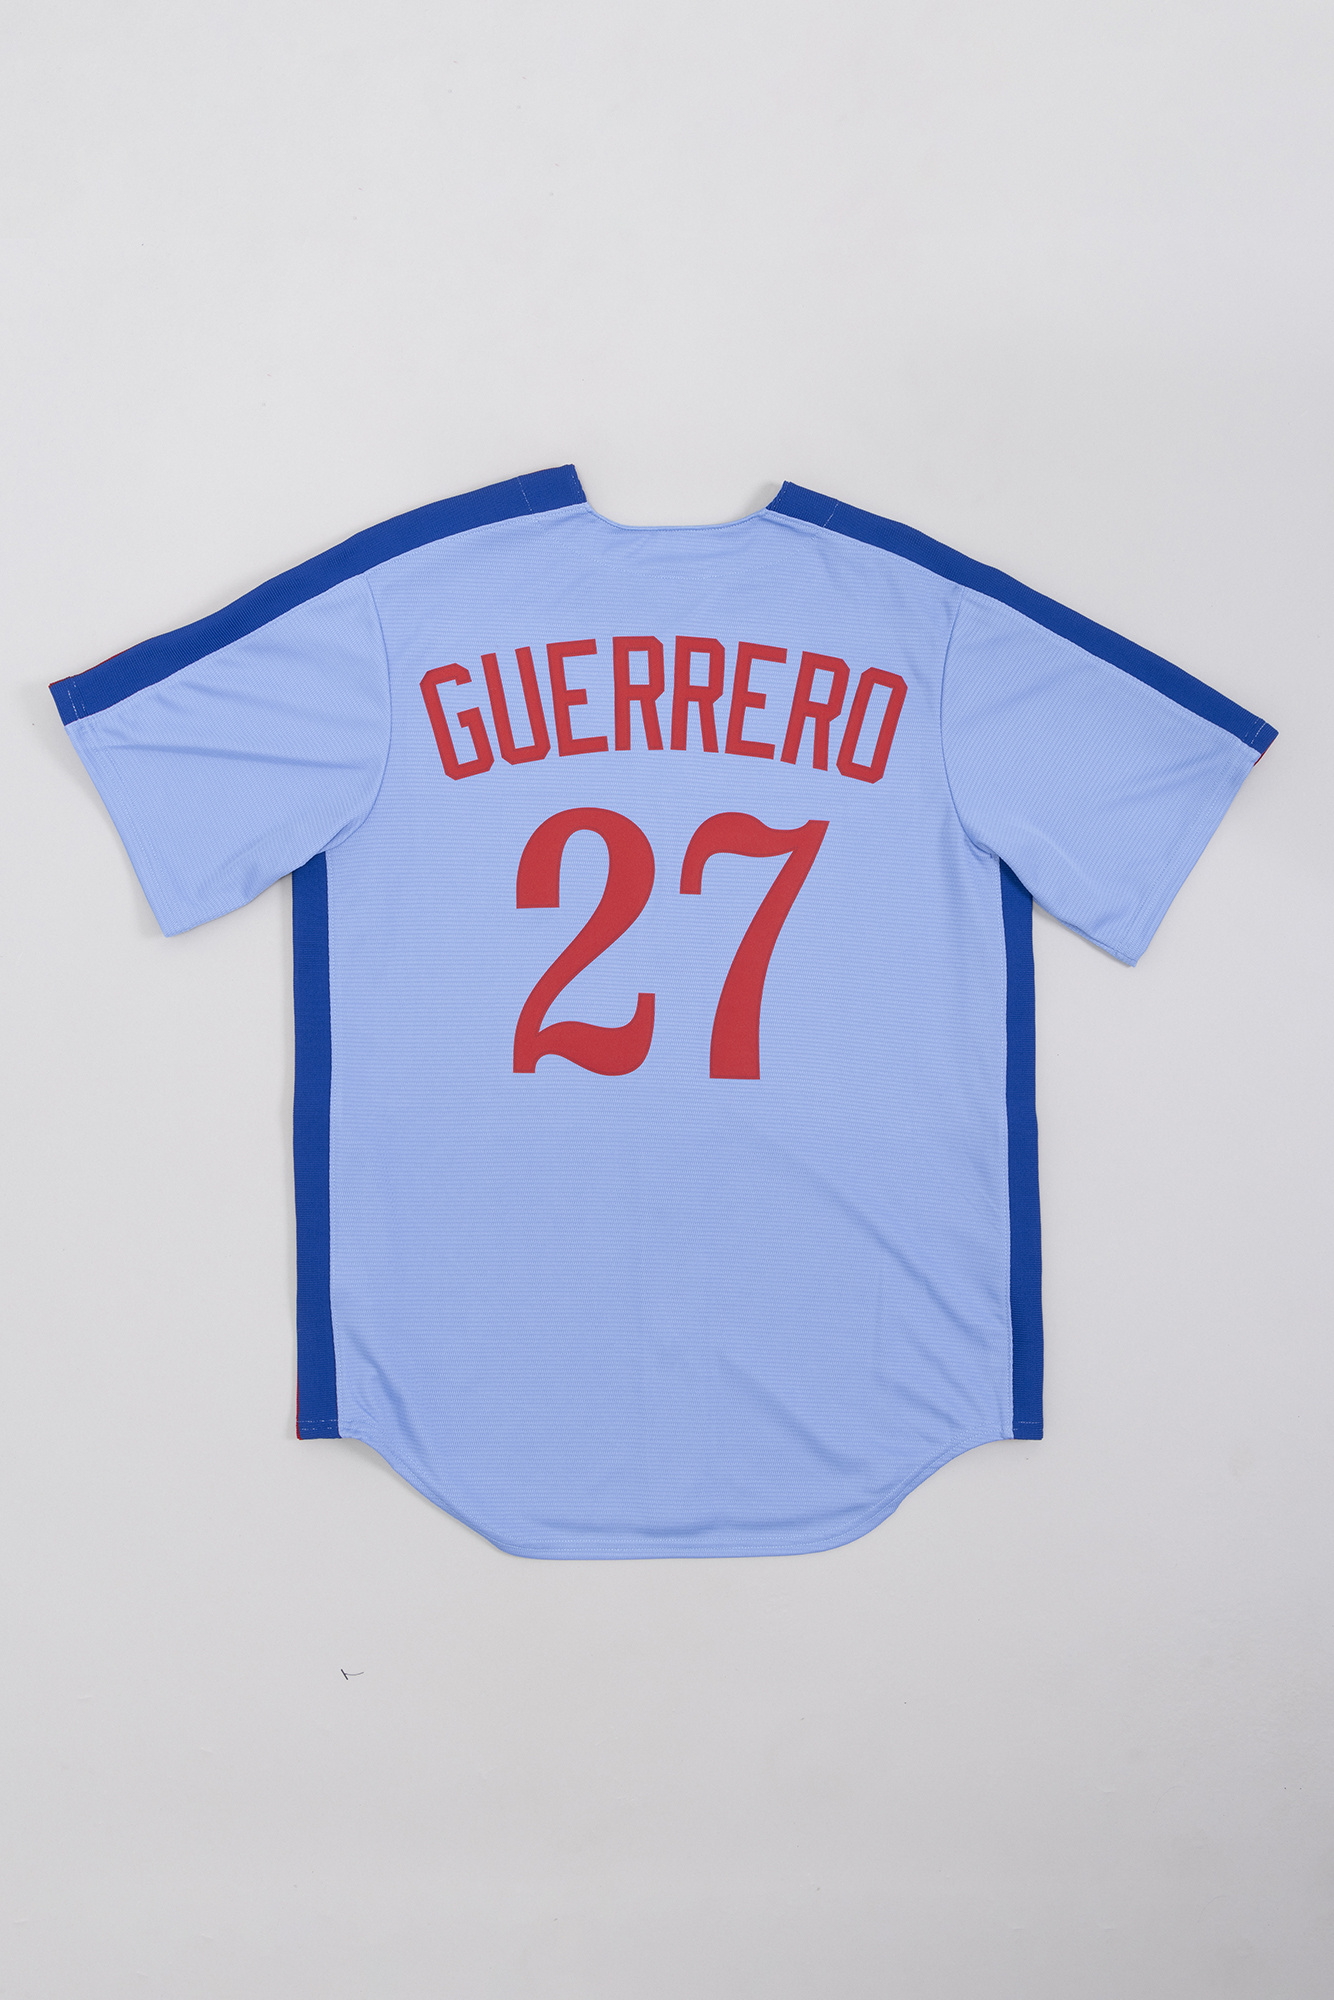 Vladimir Guerrero #27 Montreal Expos Patch Grey Jersey size 56